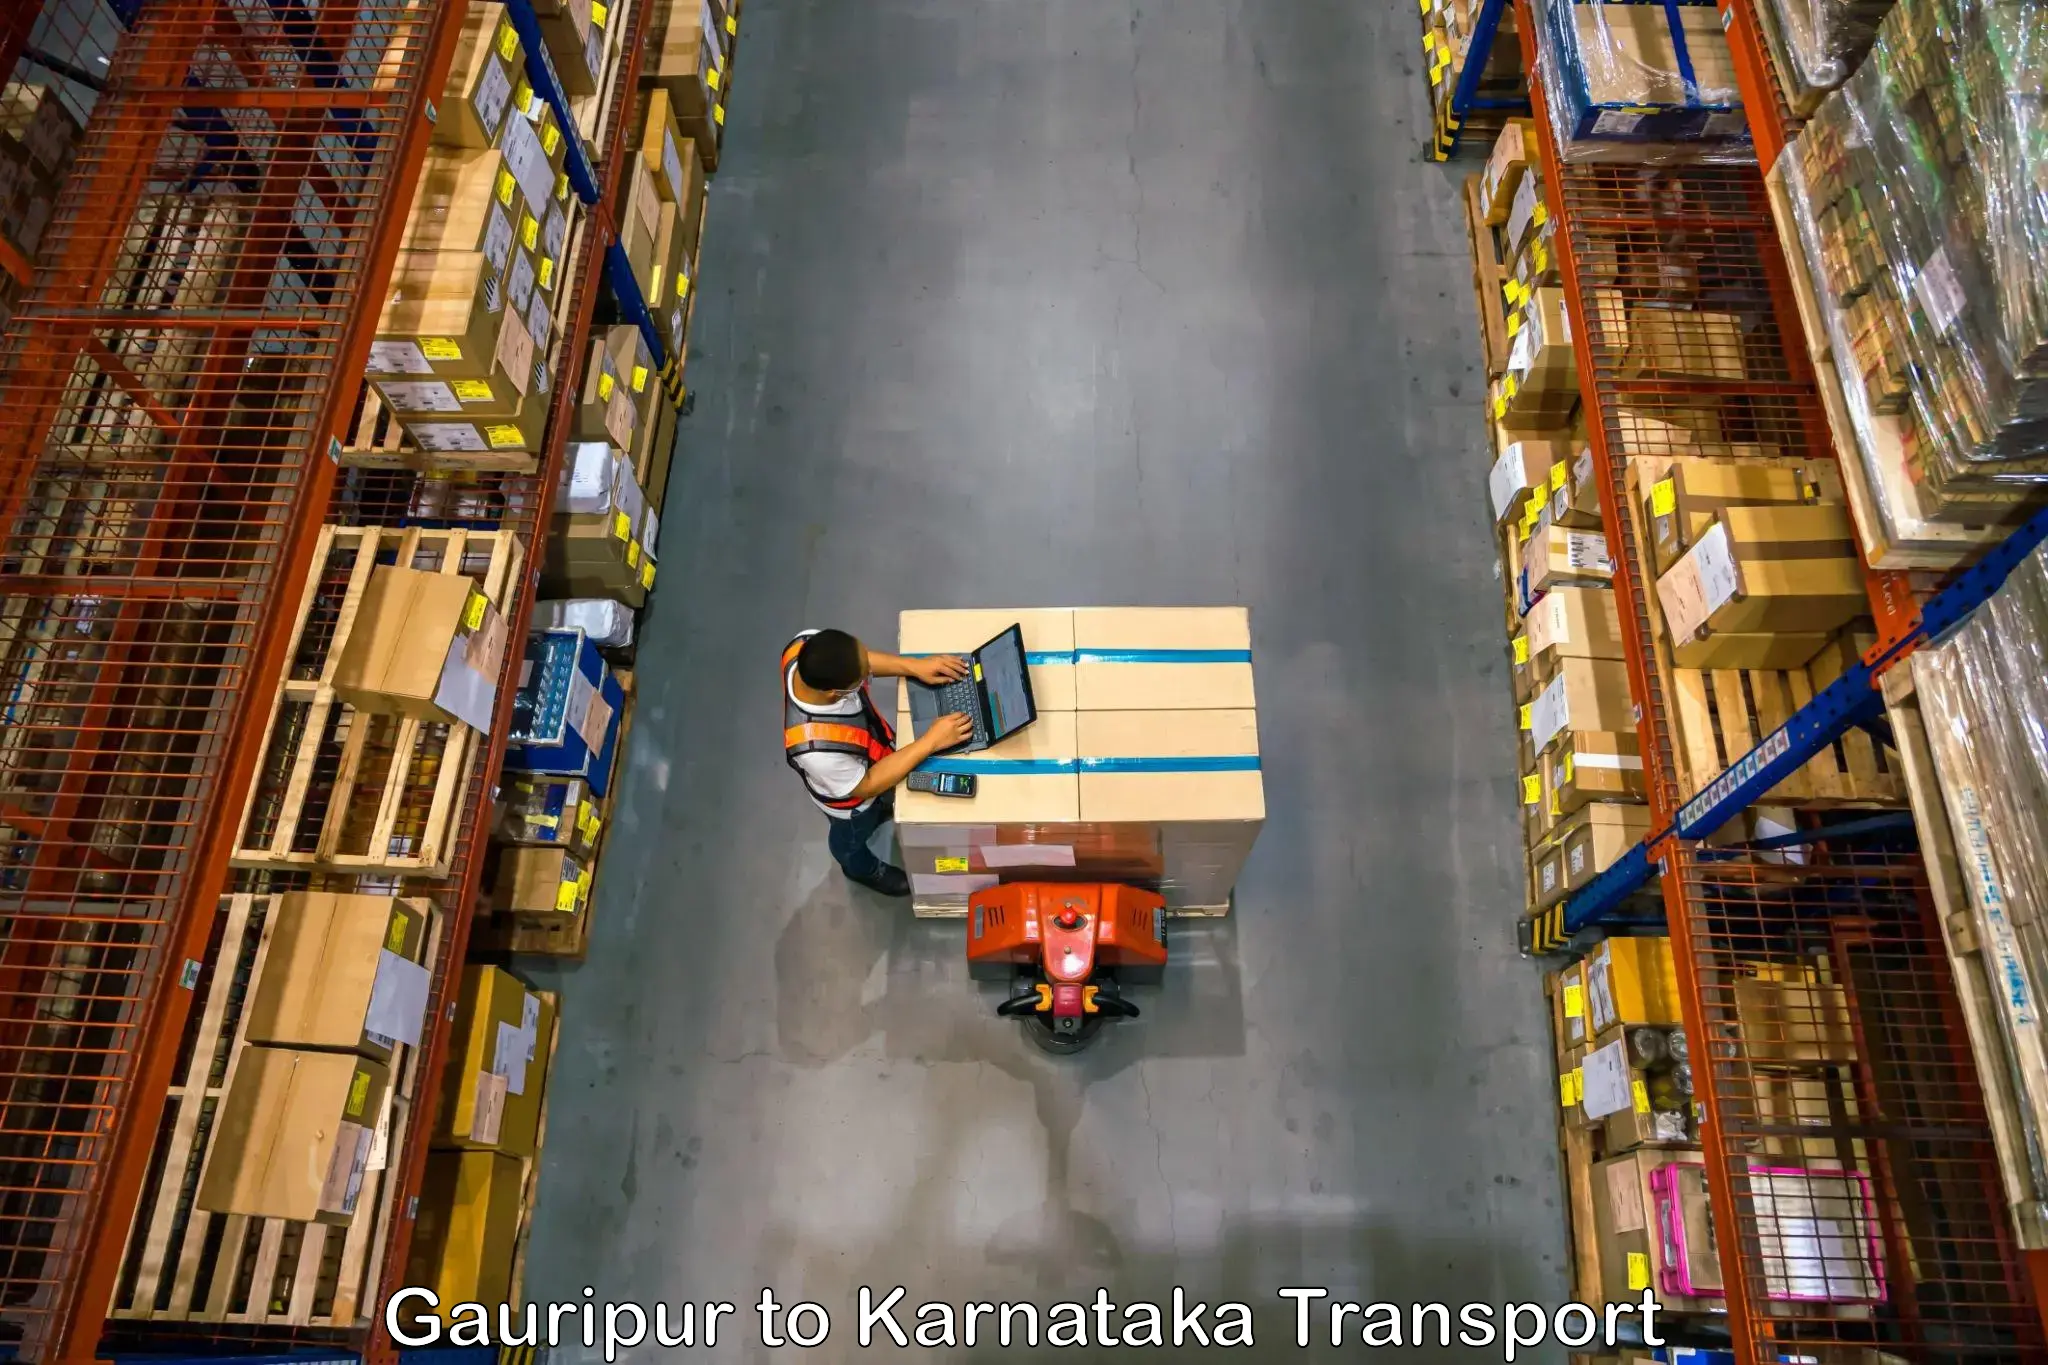 Truck transport companies in India Gauripur to Belagavi